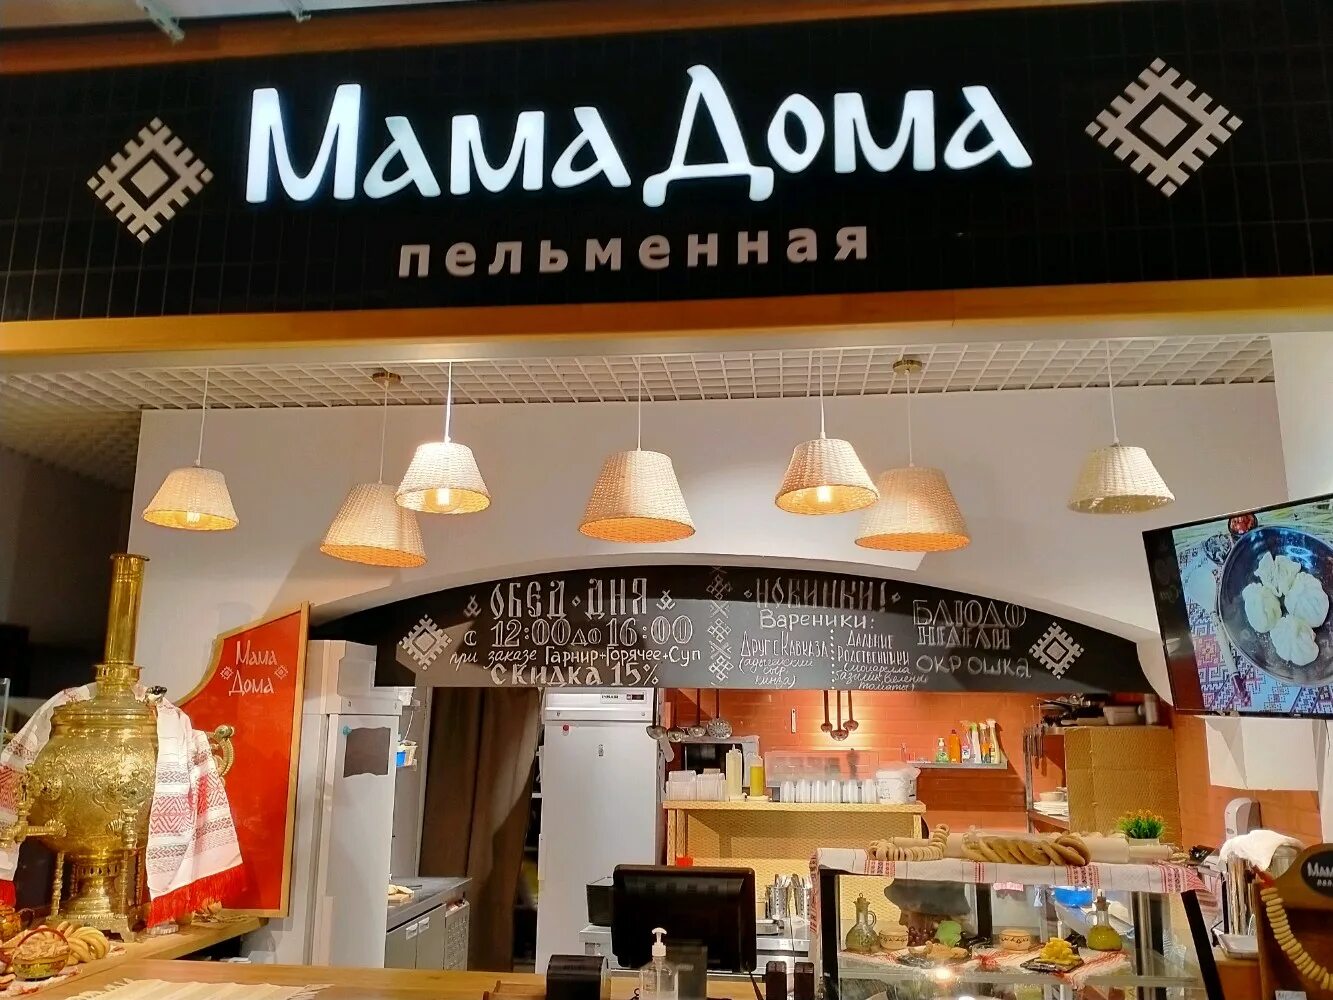 Мама я дома меню. Кафе у мамы. Кафе мама дома. Кафе мама Челябинск. Дом кафе Челябинск.